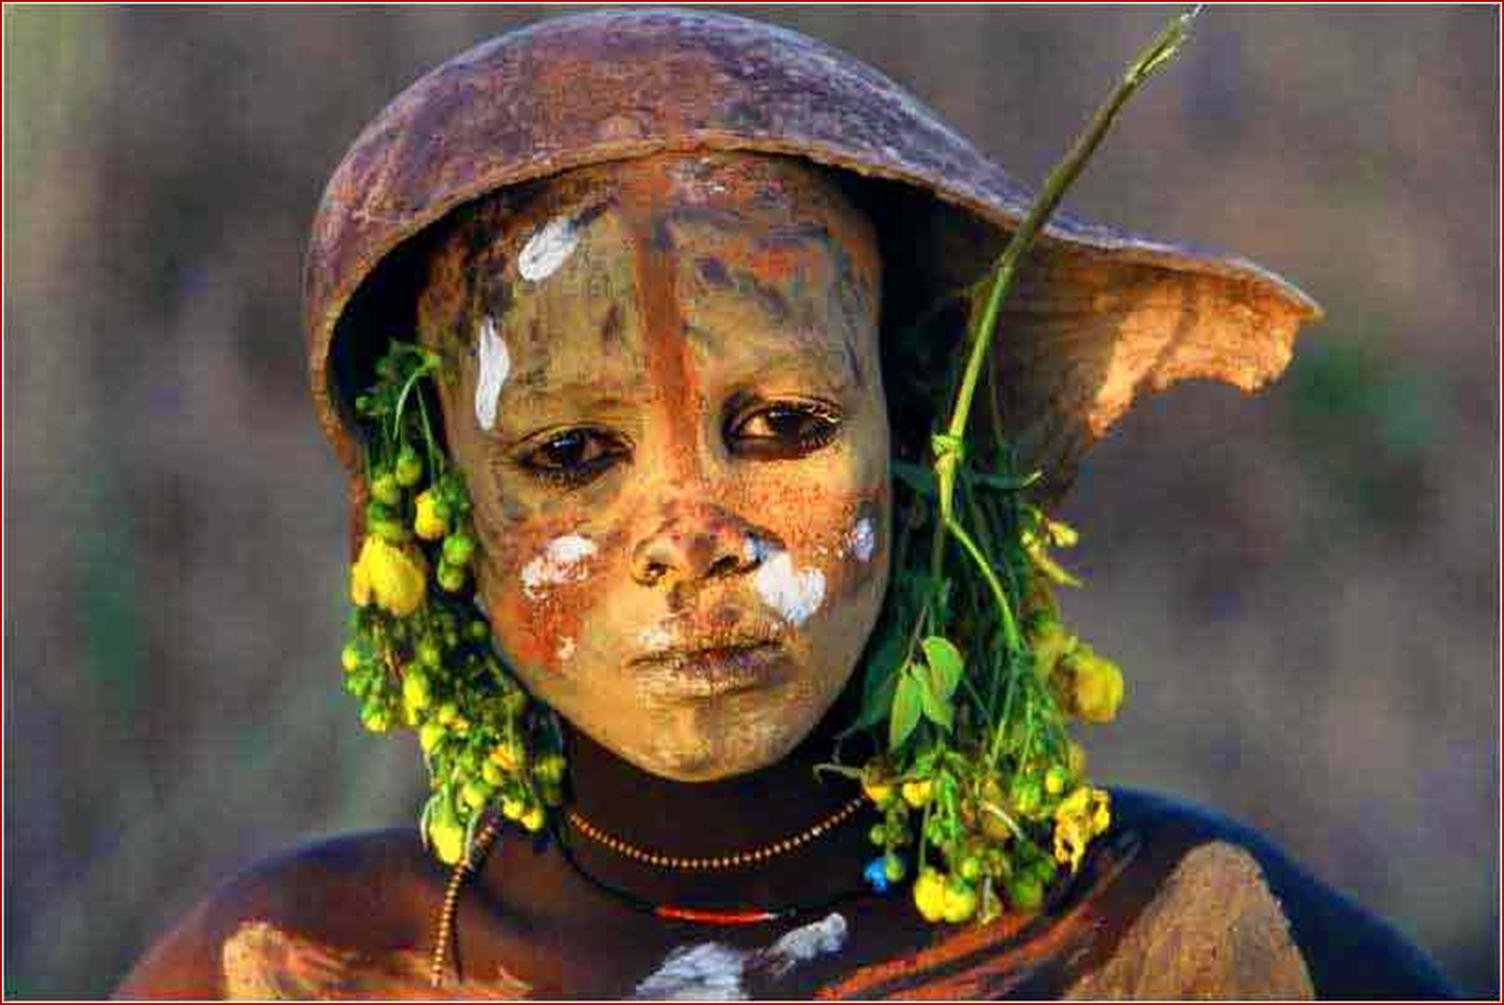 Tribe people. Африканское племя Мурси. Дикие племена Африки Мурси.